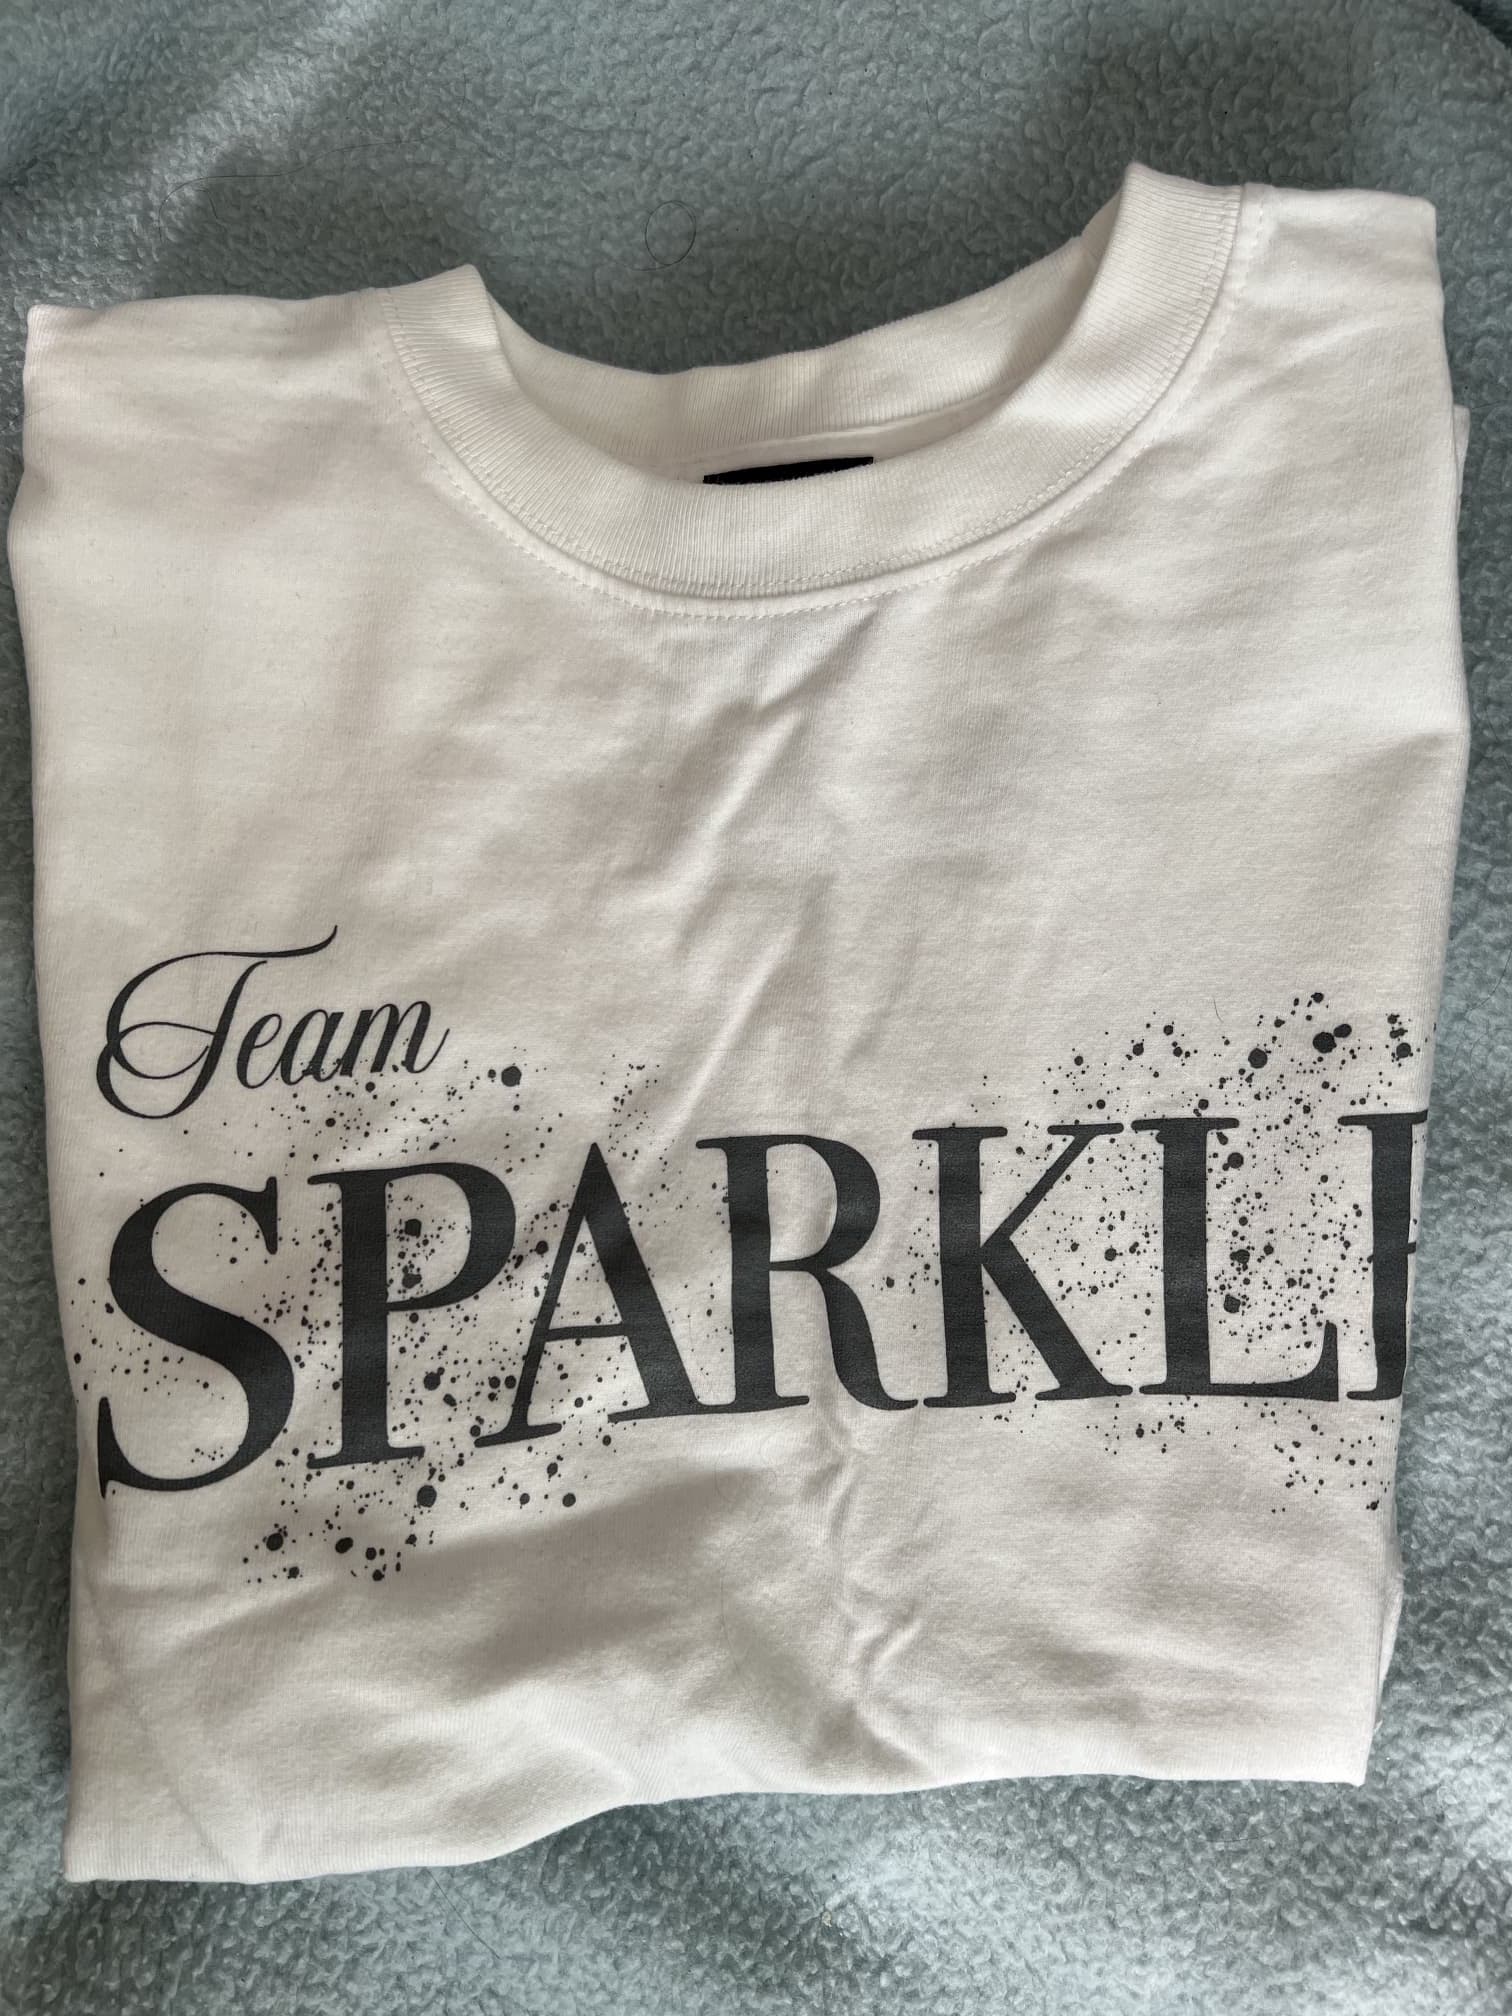 SPARKLEツアーオリジナル Team SPARKLE スタッフTシャツ レプリカ 白